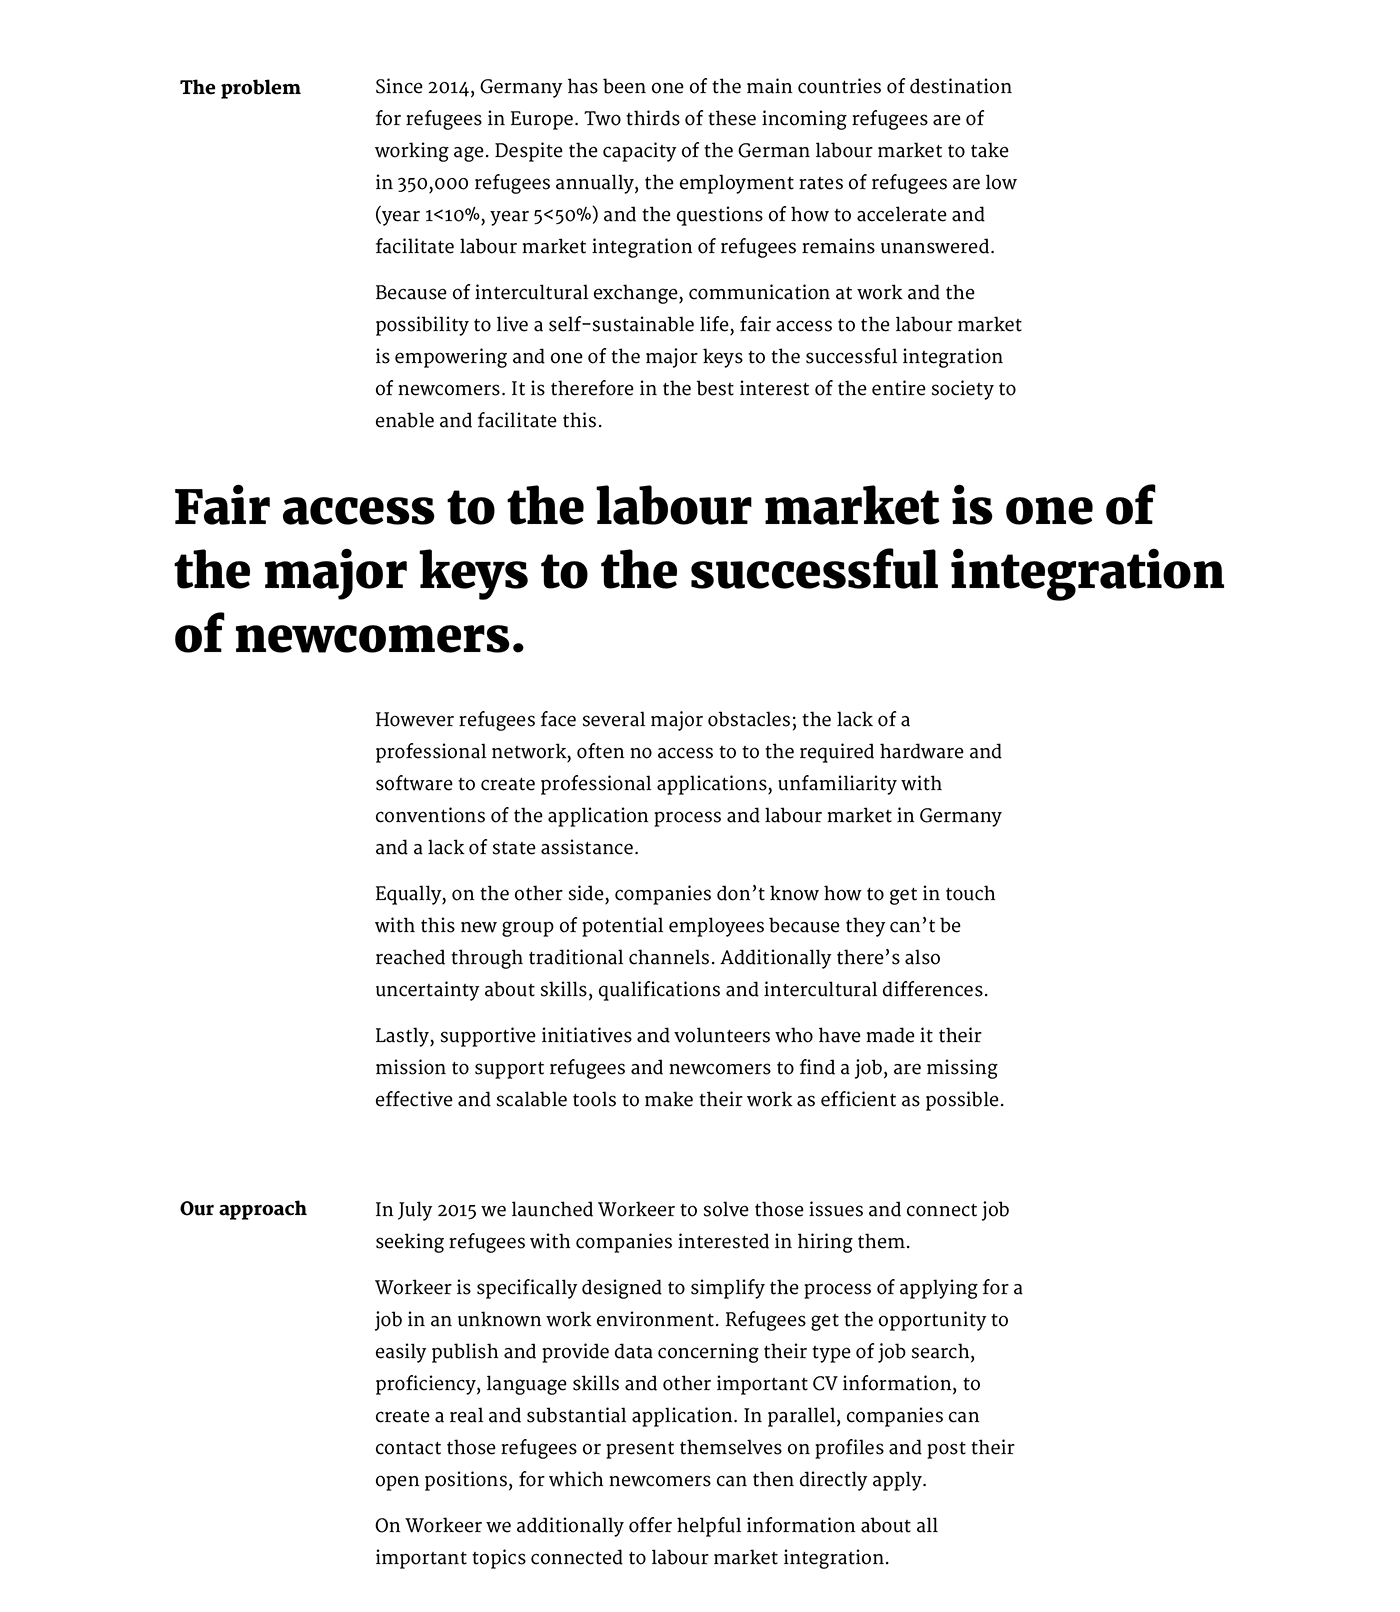 workeer online Platform job board Inclusive integration plattform Jobbörse